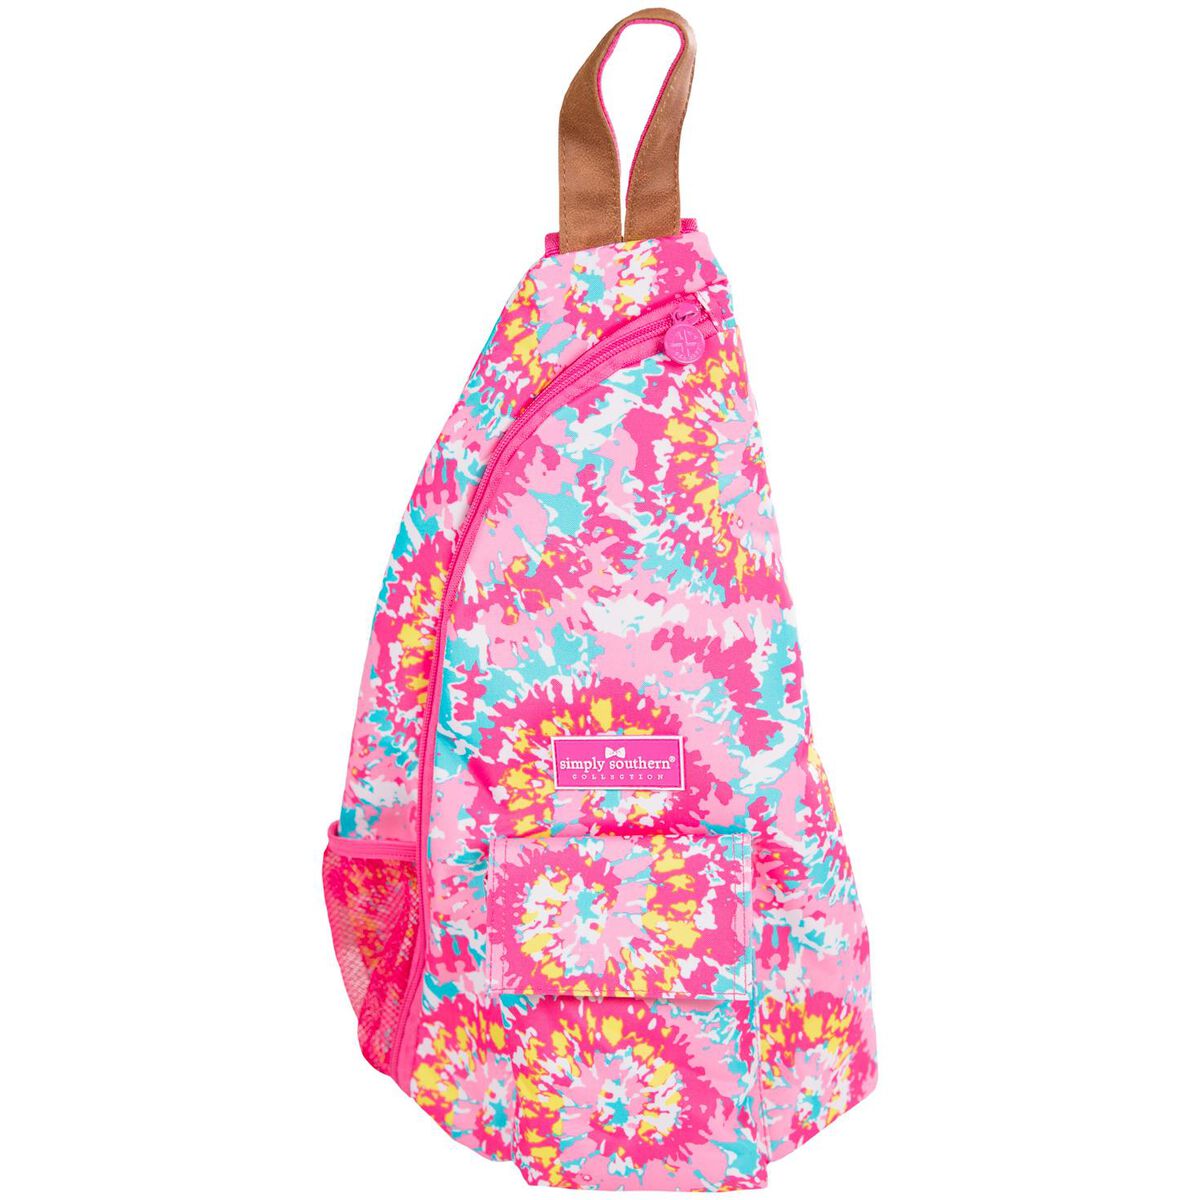 Simply Southern Pink Tie-Dye Sling Bag - Handbags & Purses - Hallmark